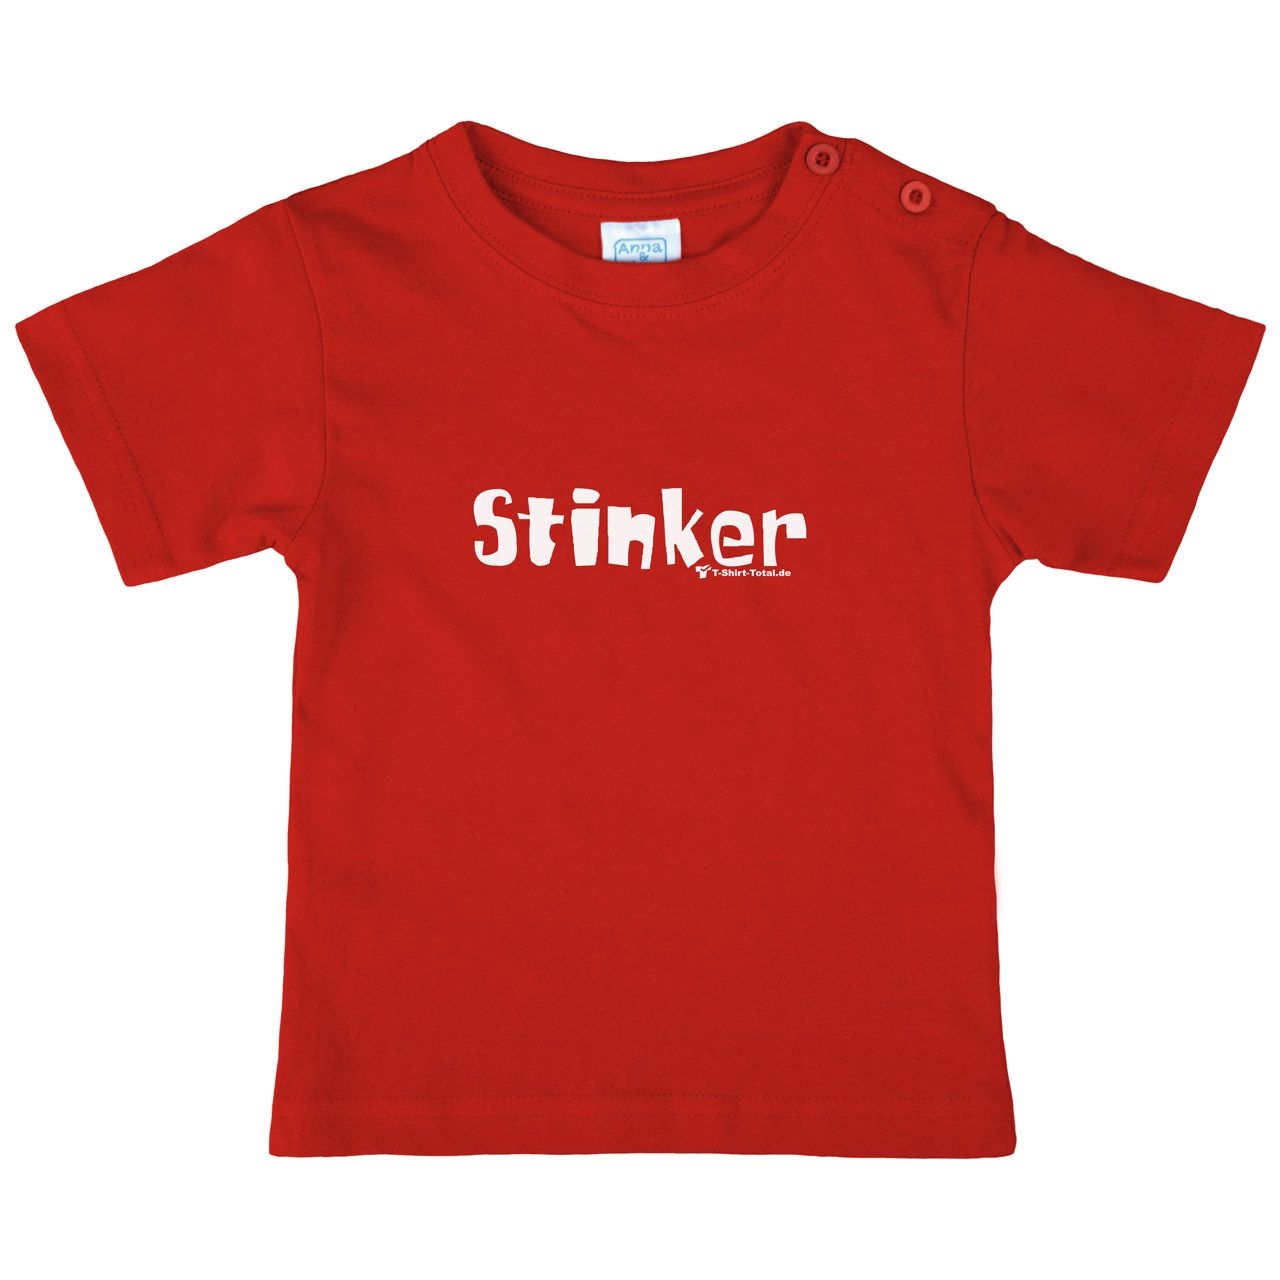 Stinker Kinder T-Shirt rot 80 / 86